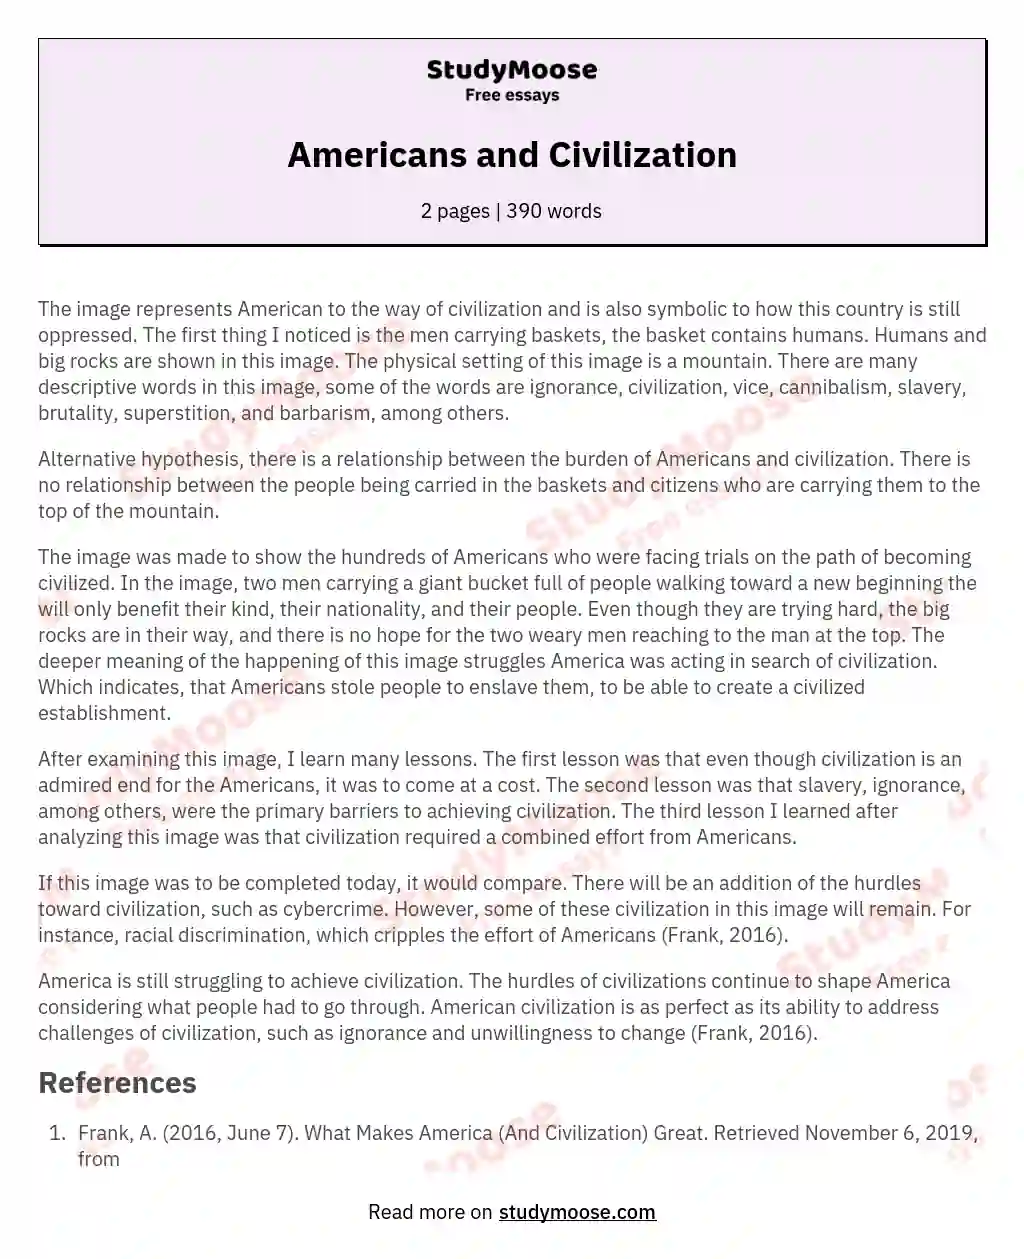 Americans and Civilization essay